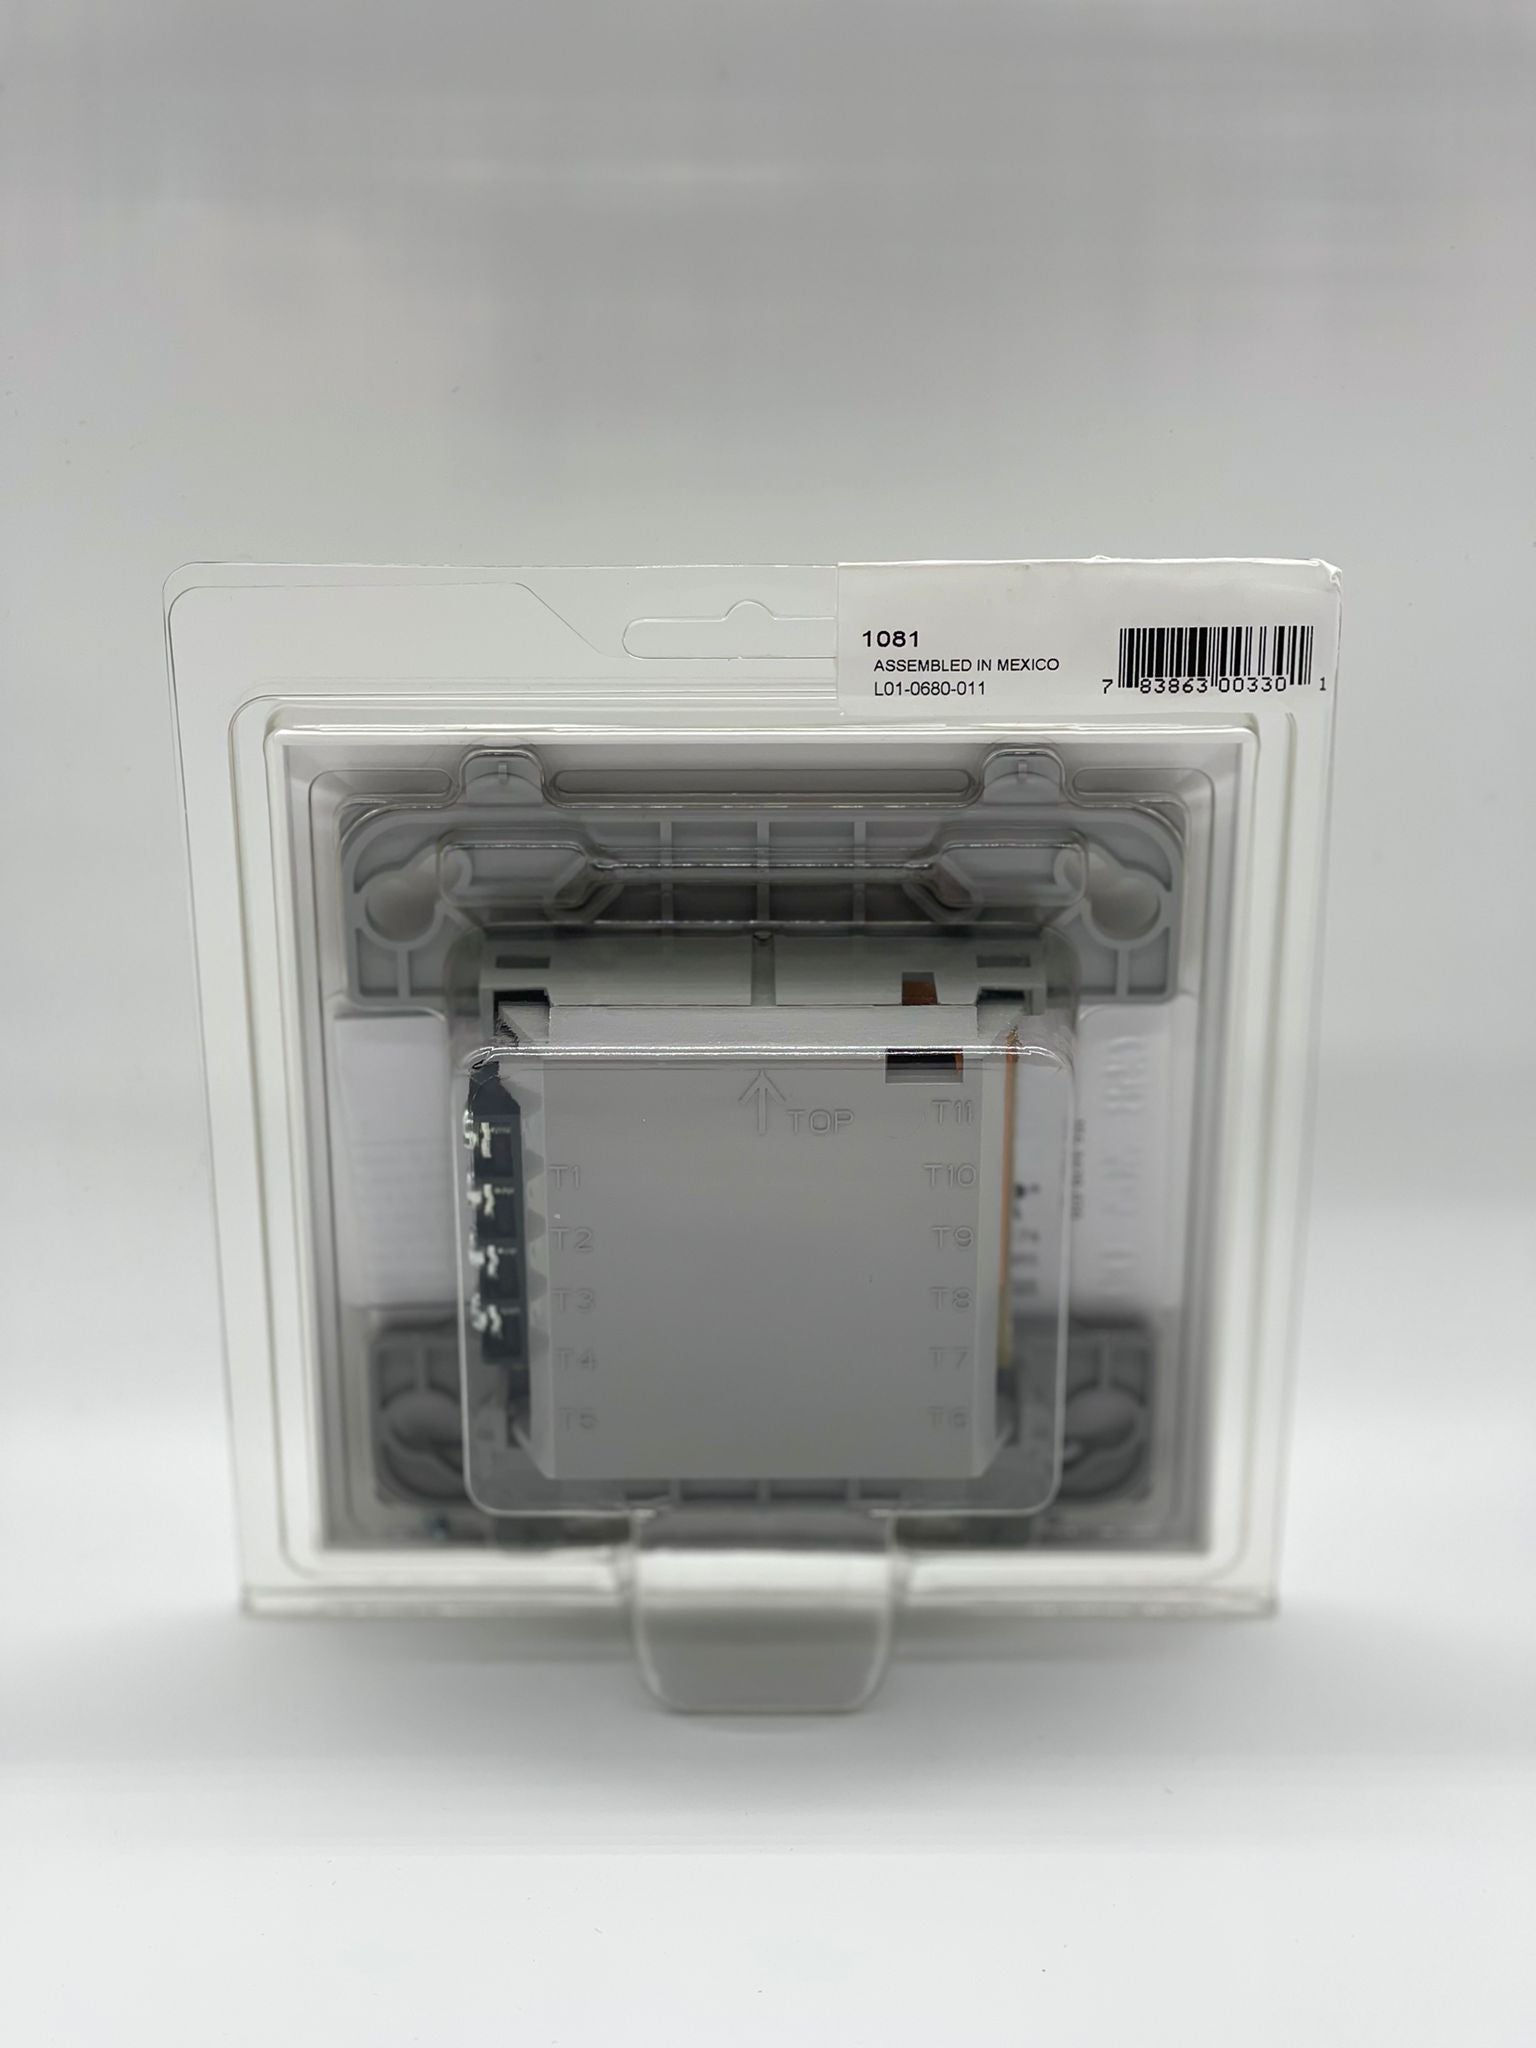 Mircom M500X Fault Isolator Module - The Fire Alarm Supplier